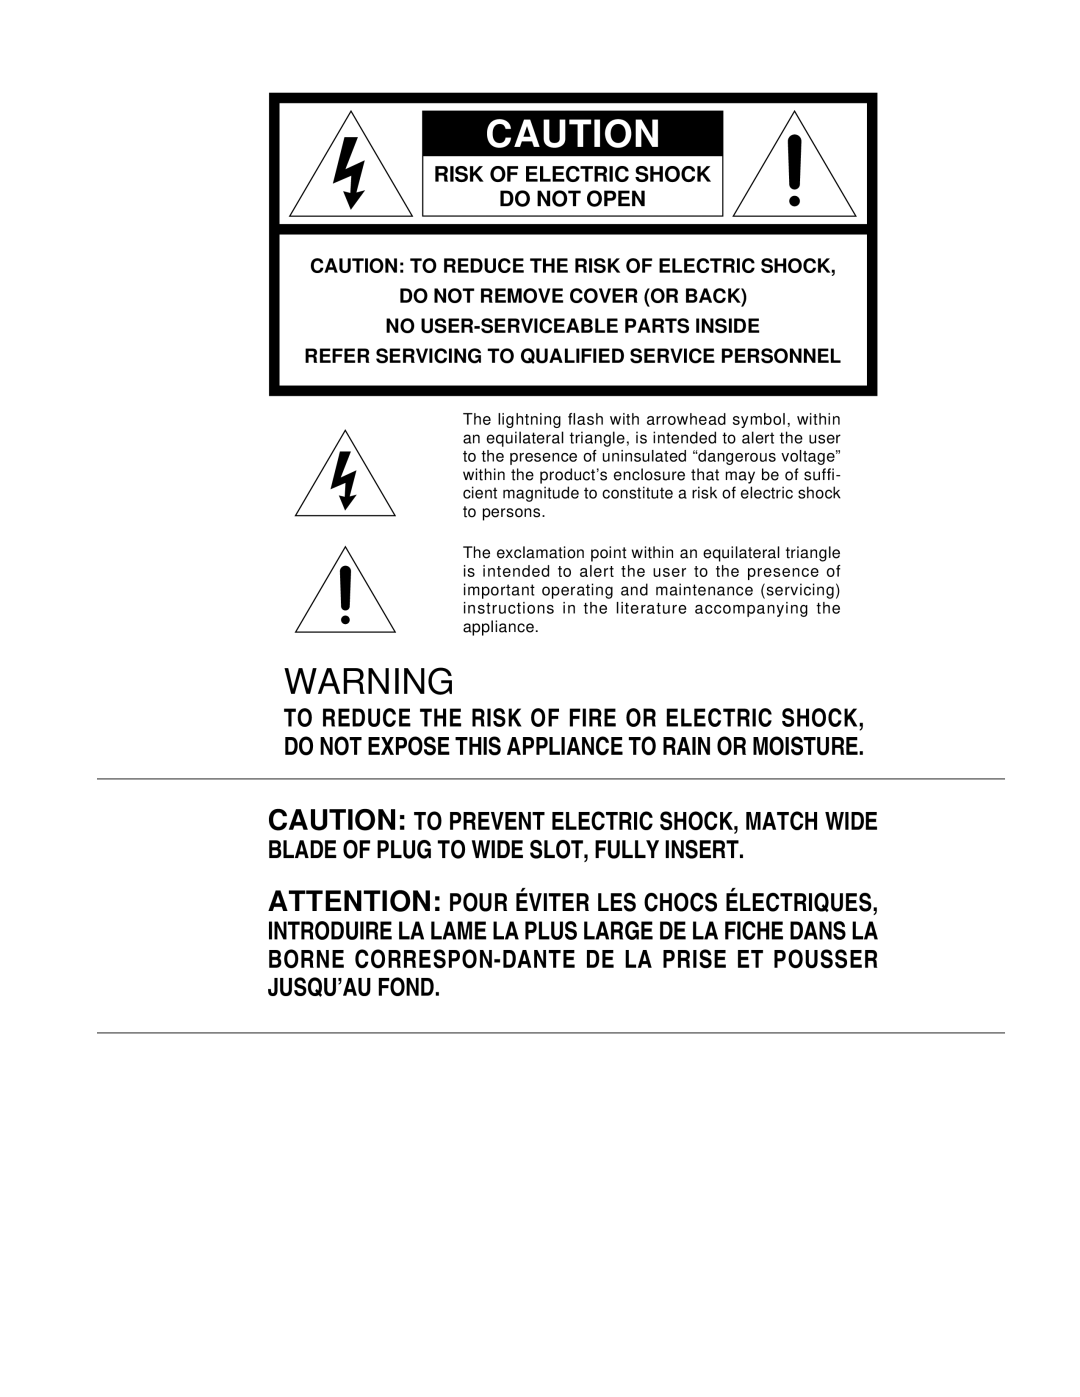 Marantz PMD690 manual Risk of Electric Shock Do not Open 